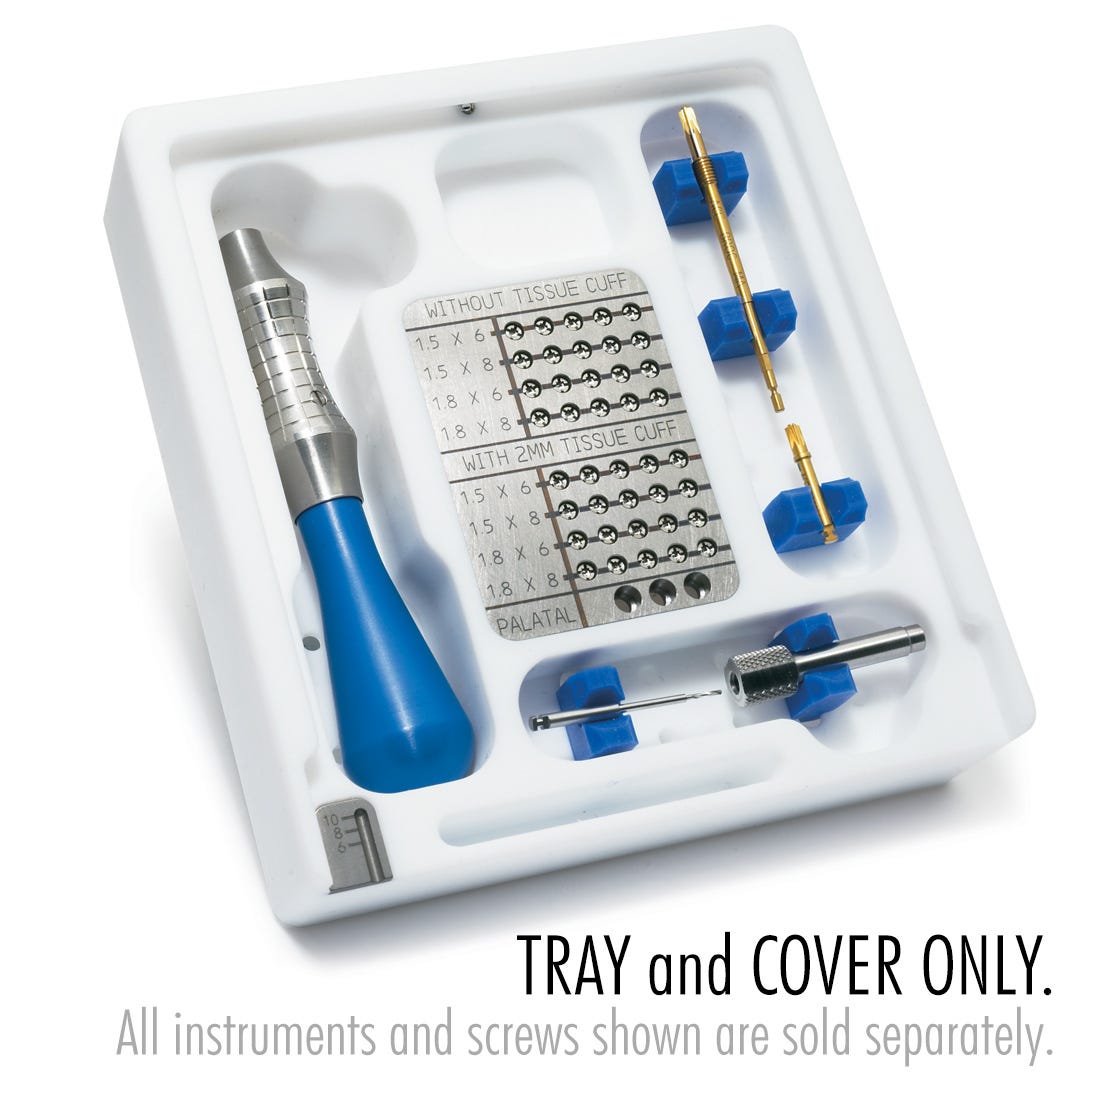 A.C.E. Orthodontic Tray includes: delrin base, titanium inserts, cover